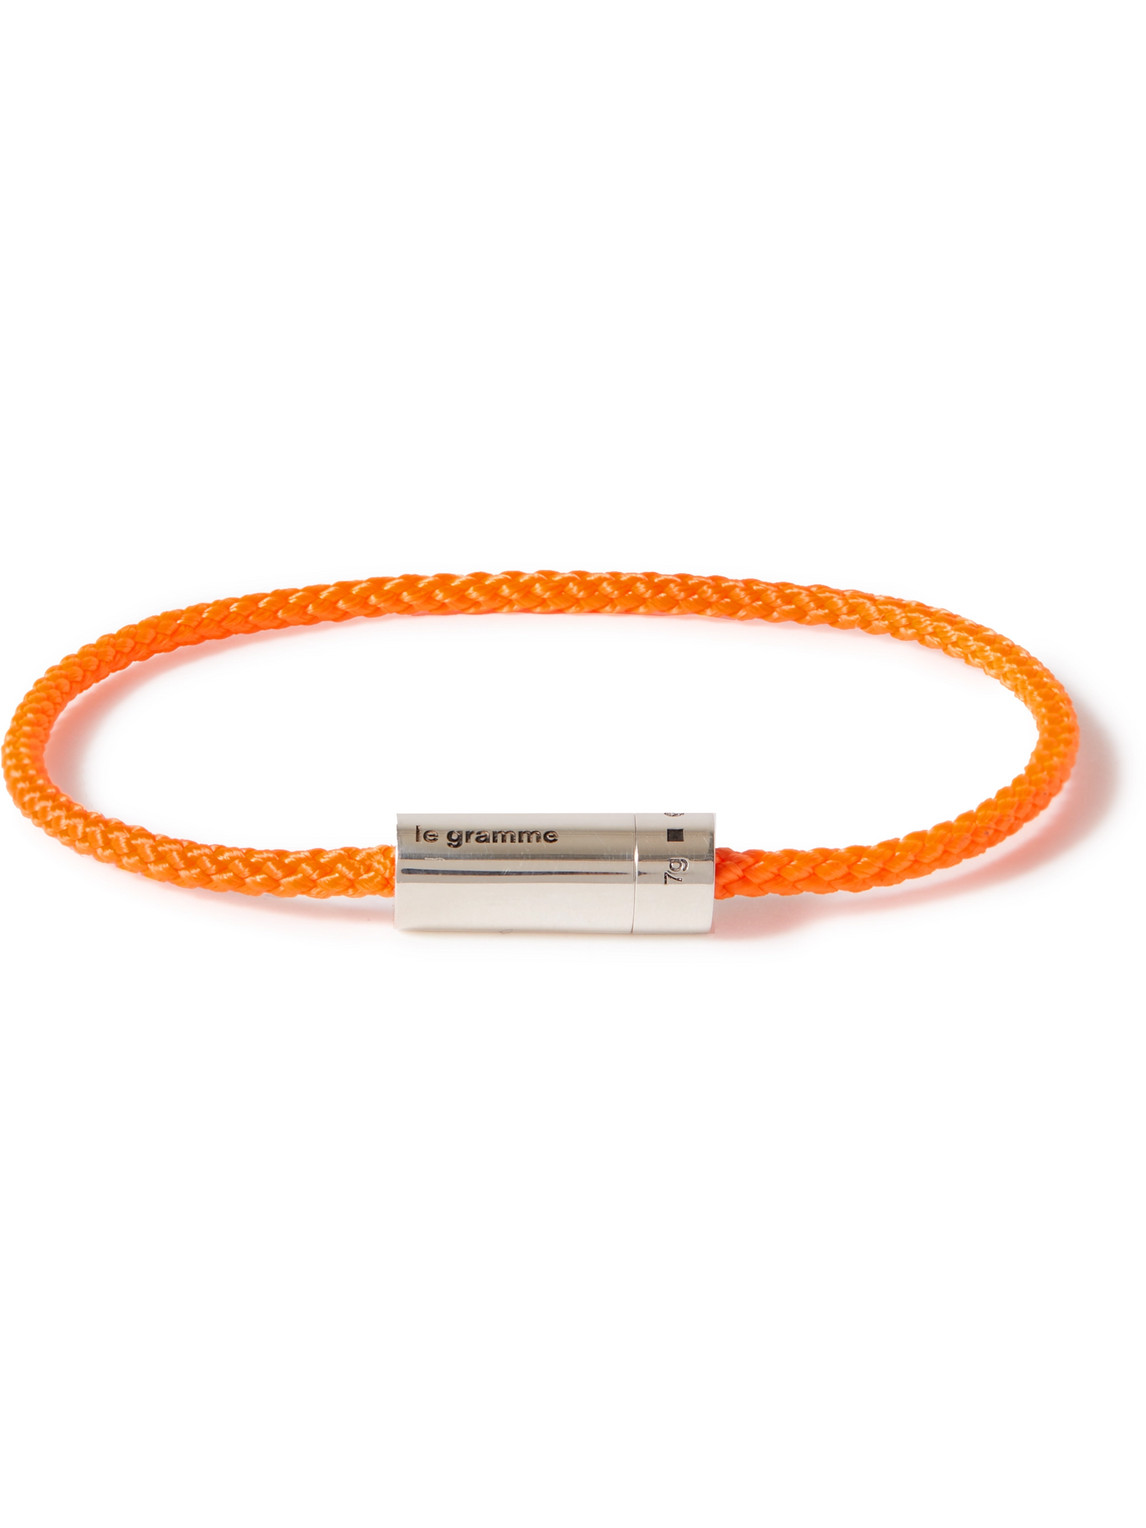 Le Gramme - 5g Braided Cord and Sterling Silver Bracelet - Men - Orange - 20 von Le Gramme